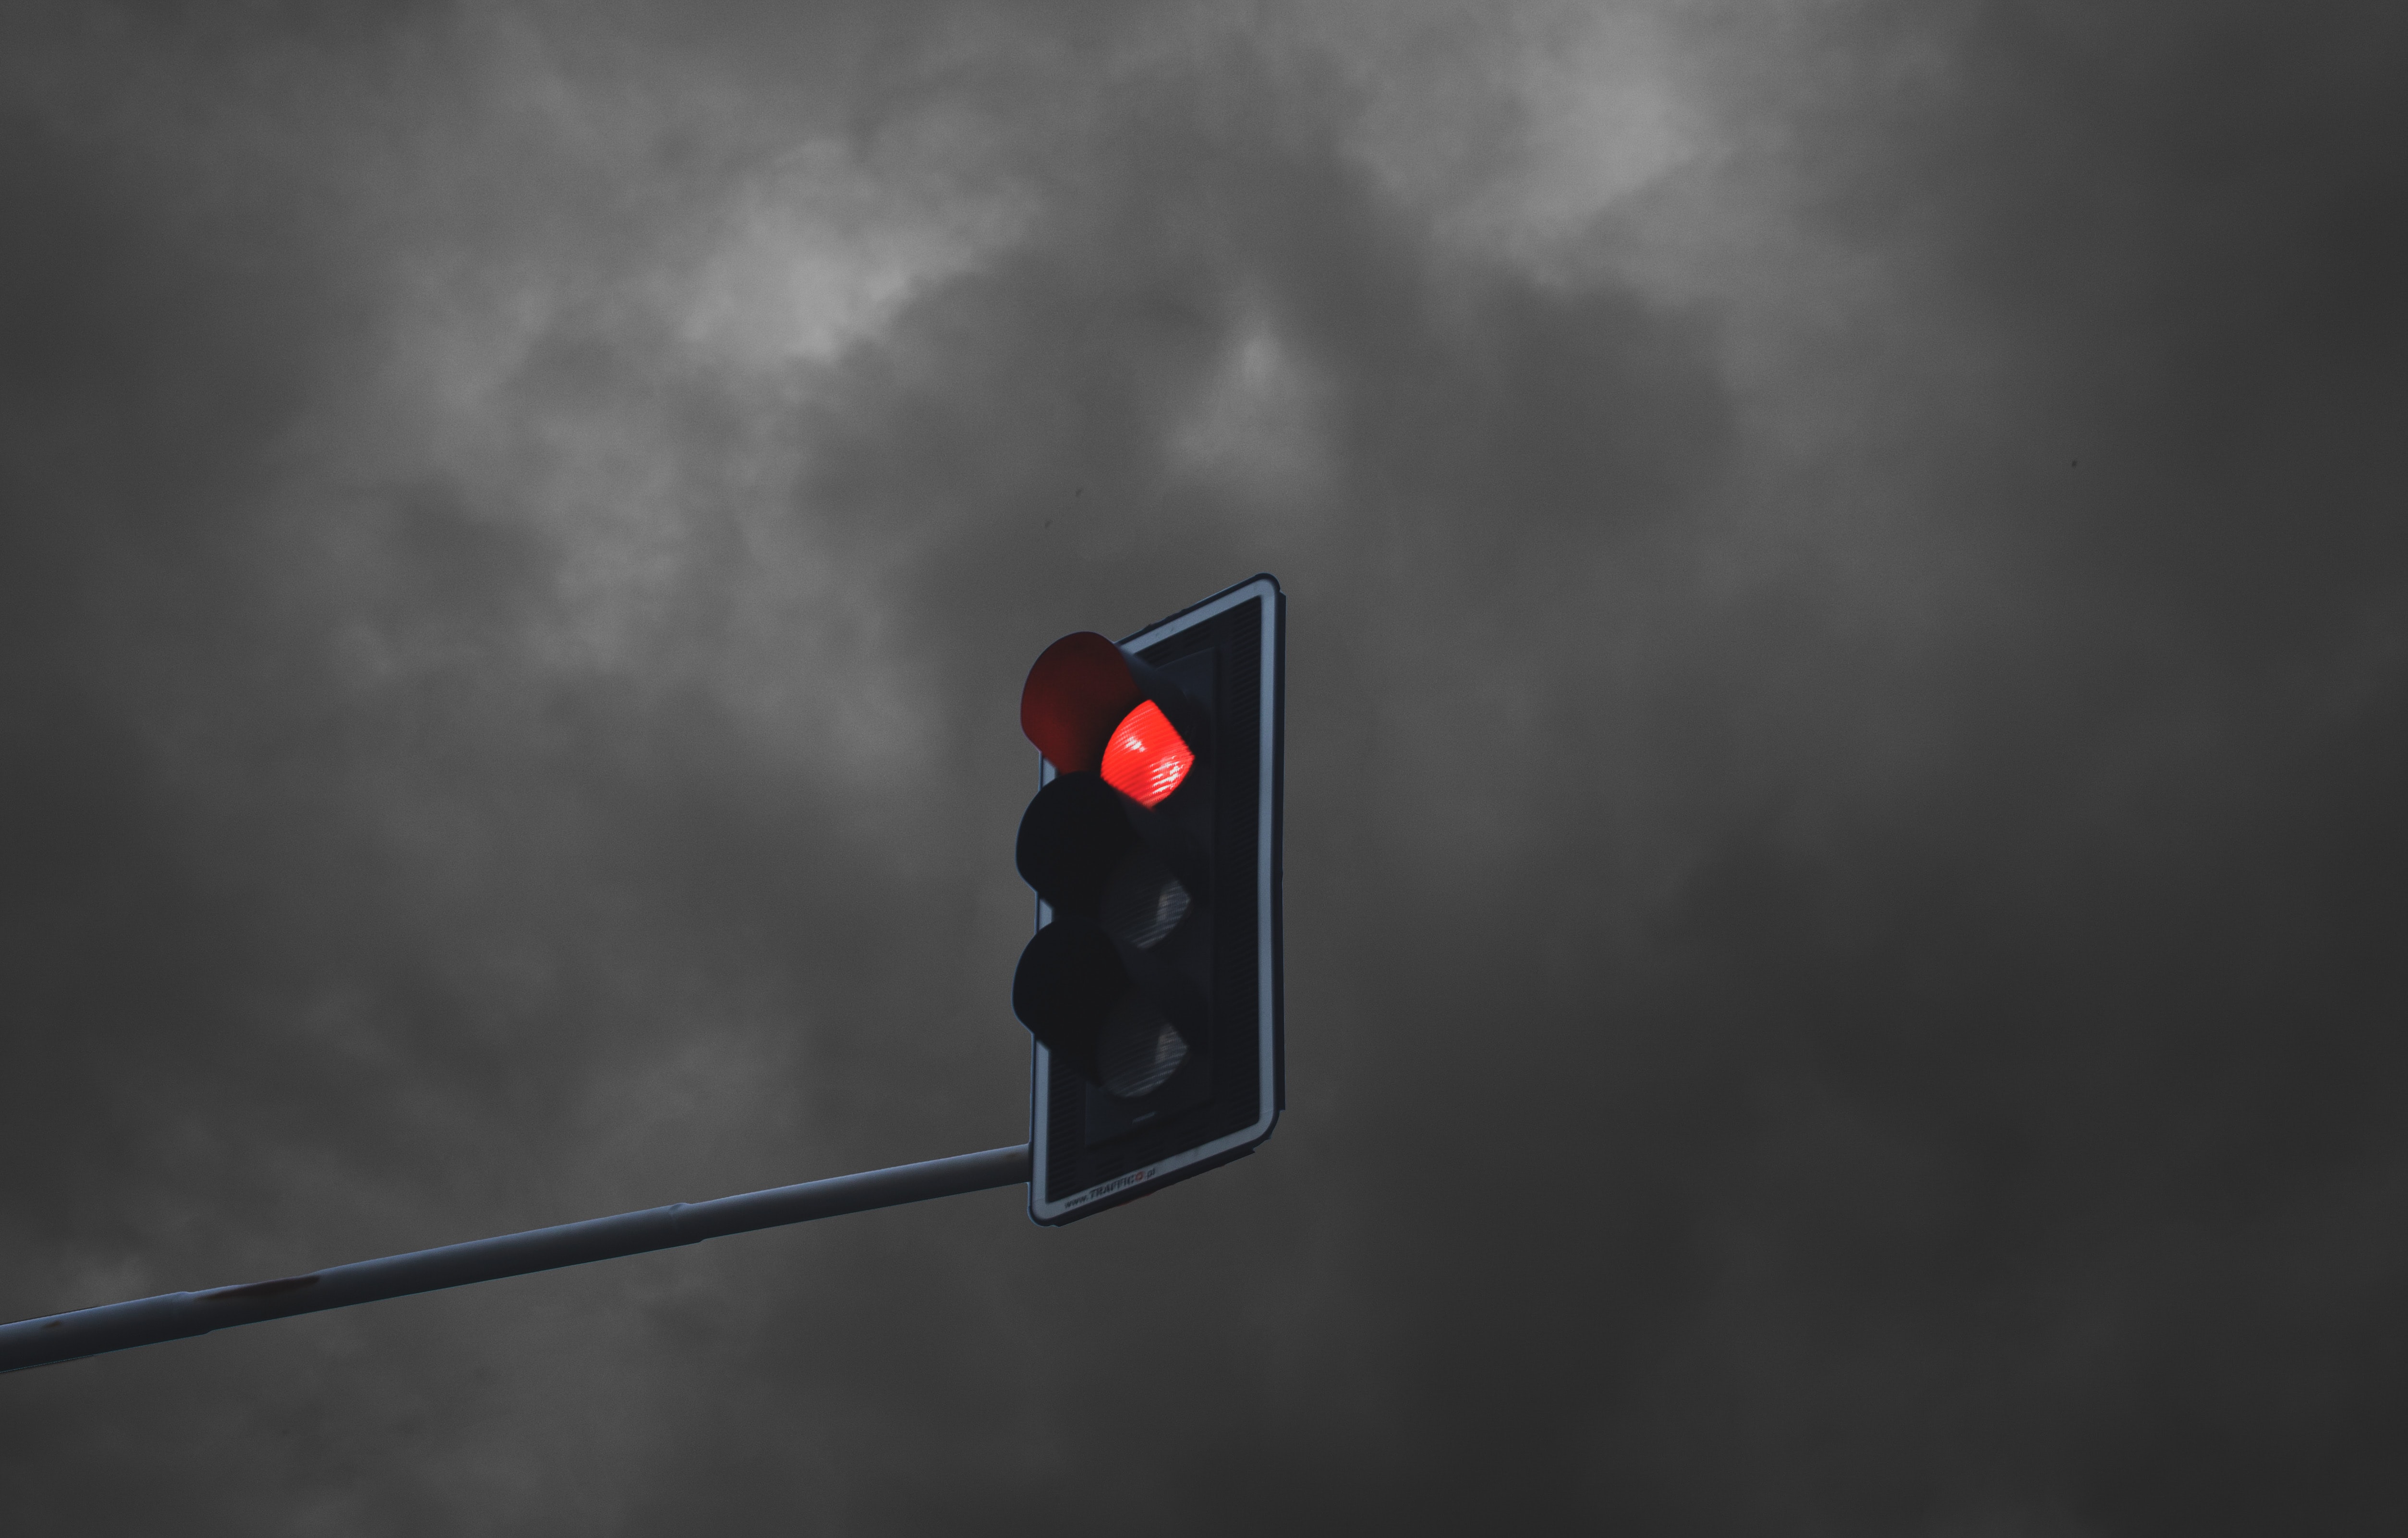 traffic light, minimalism, red, shine, light lock screen backgrounds